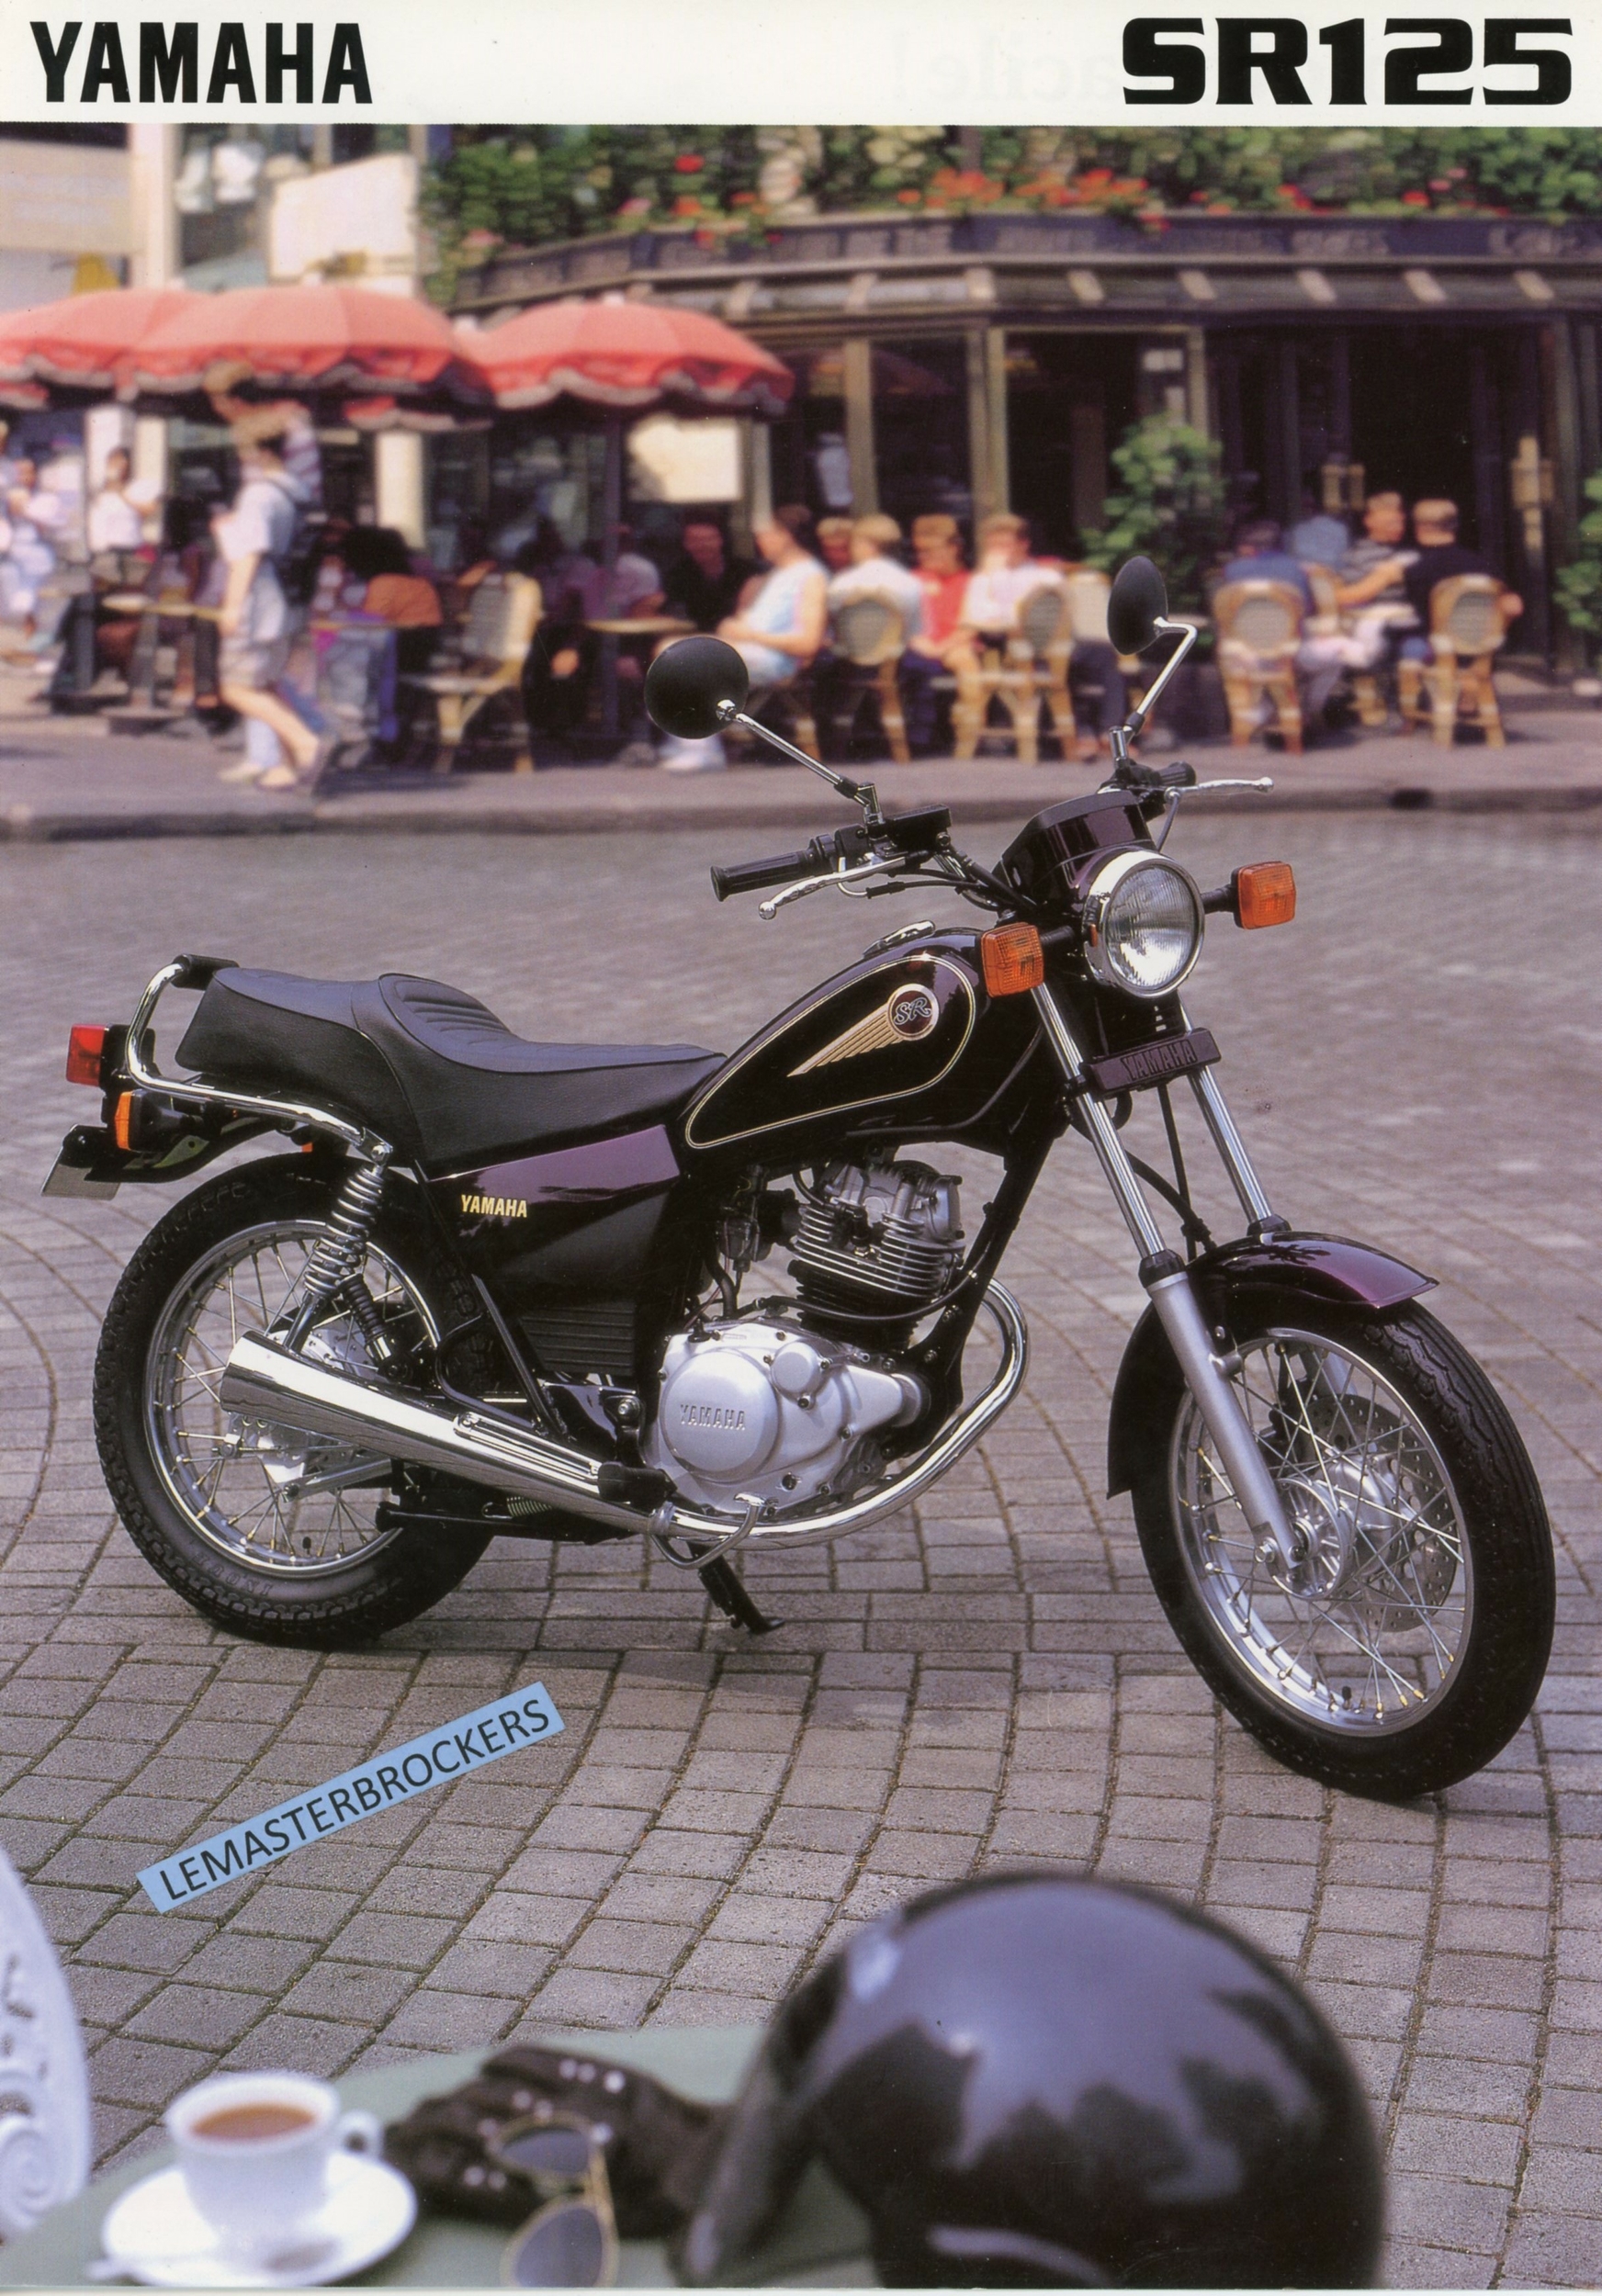 YAMAHA SR125 - BROCHURE MOTO SR 125 - 1997